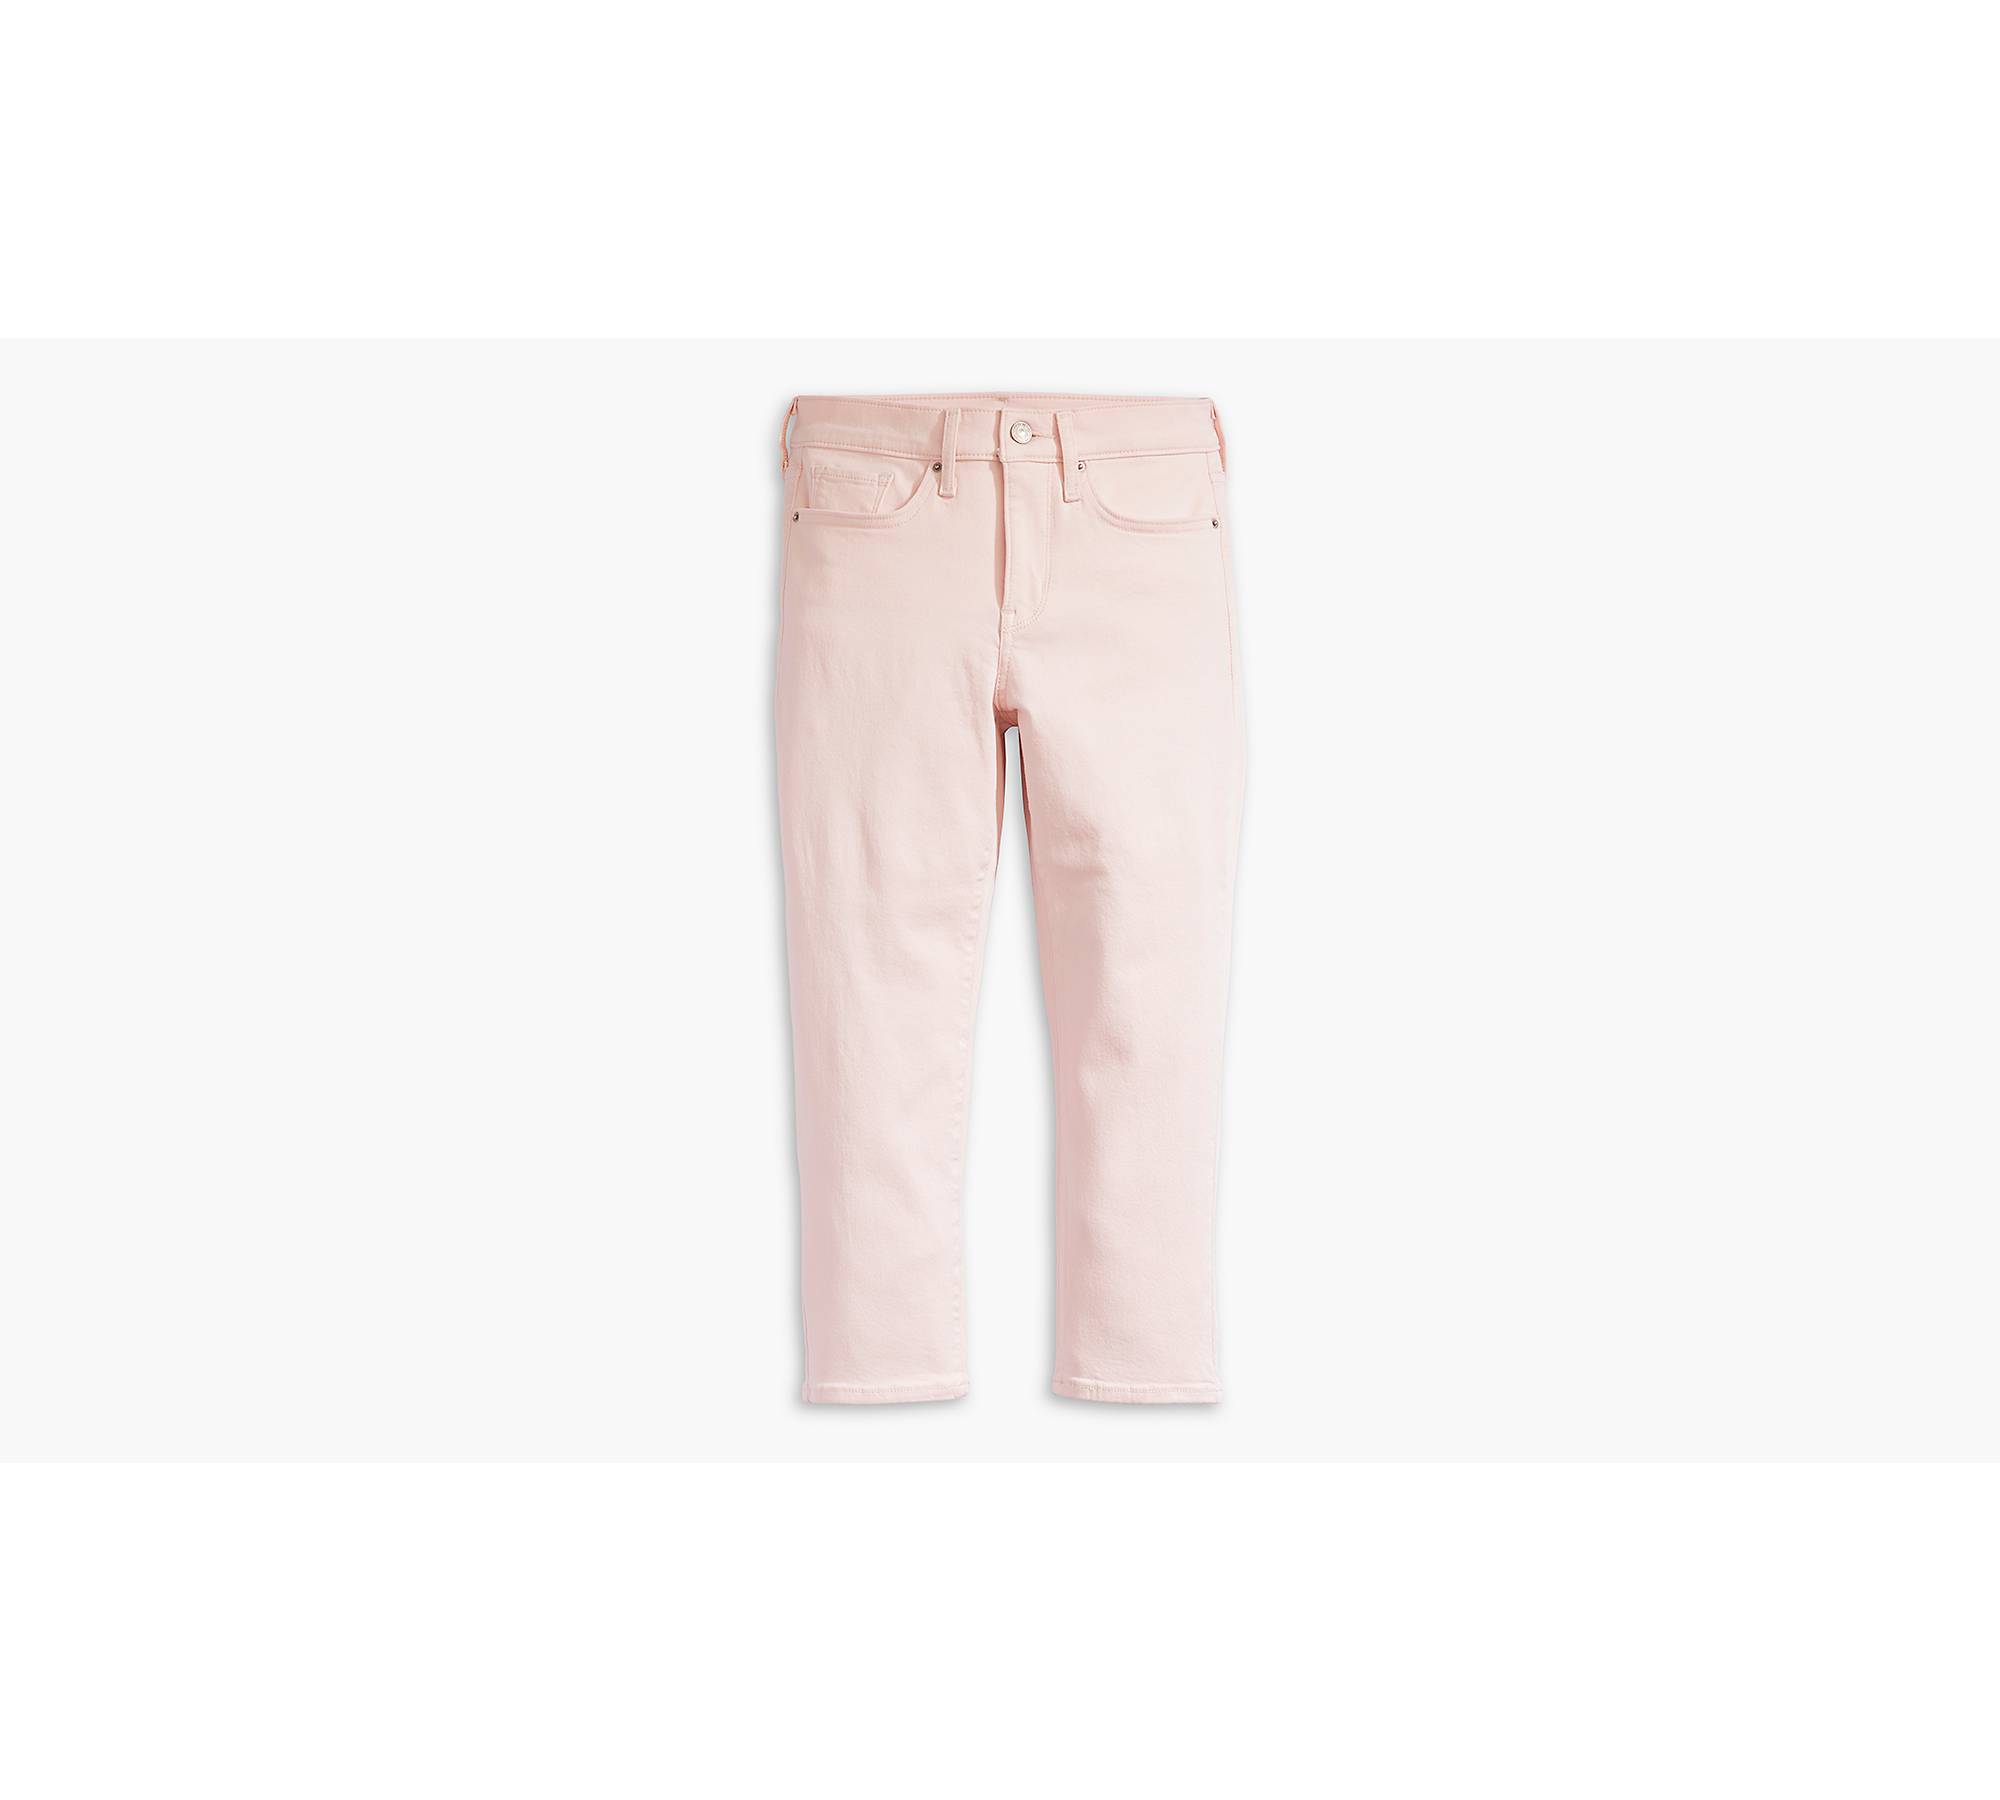 Pink Capri Pants 16 Petite  Capri pants, Pink capris, Petite